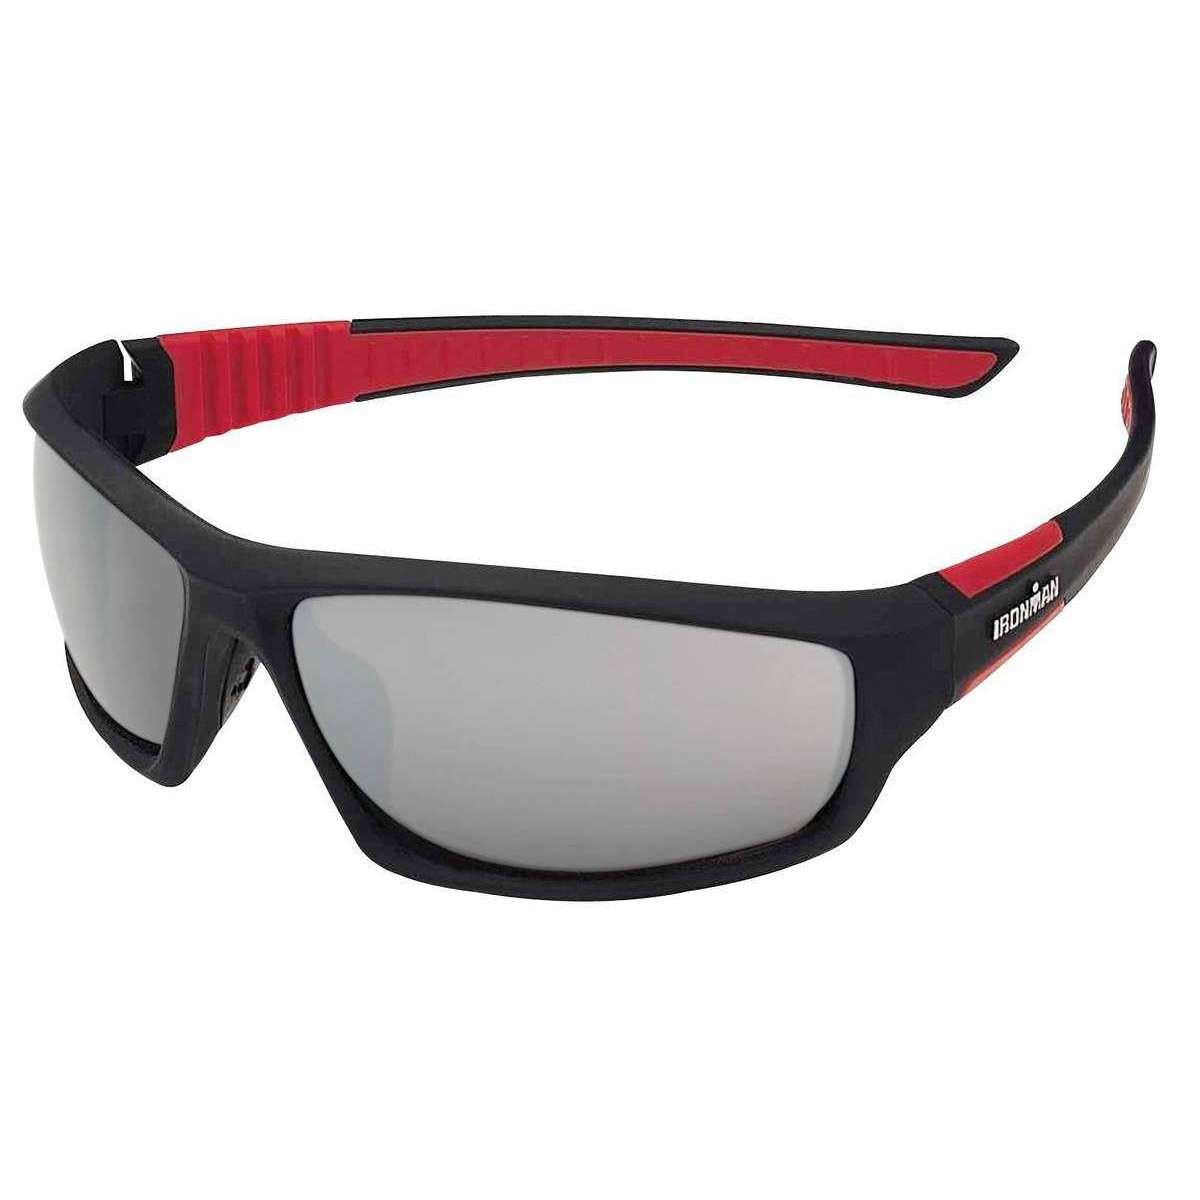 Iron Man Dextro Sports Wrap Sunglasses - Black/Red/Grey